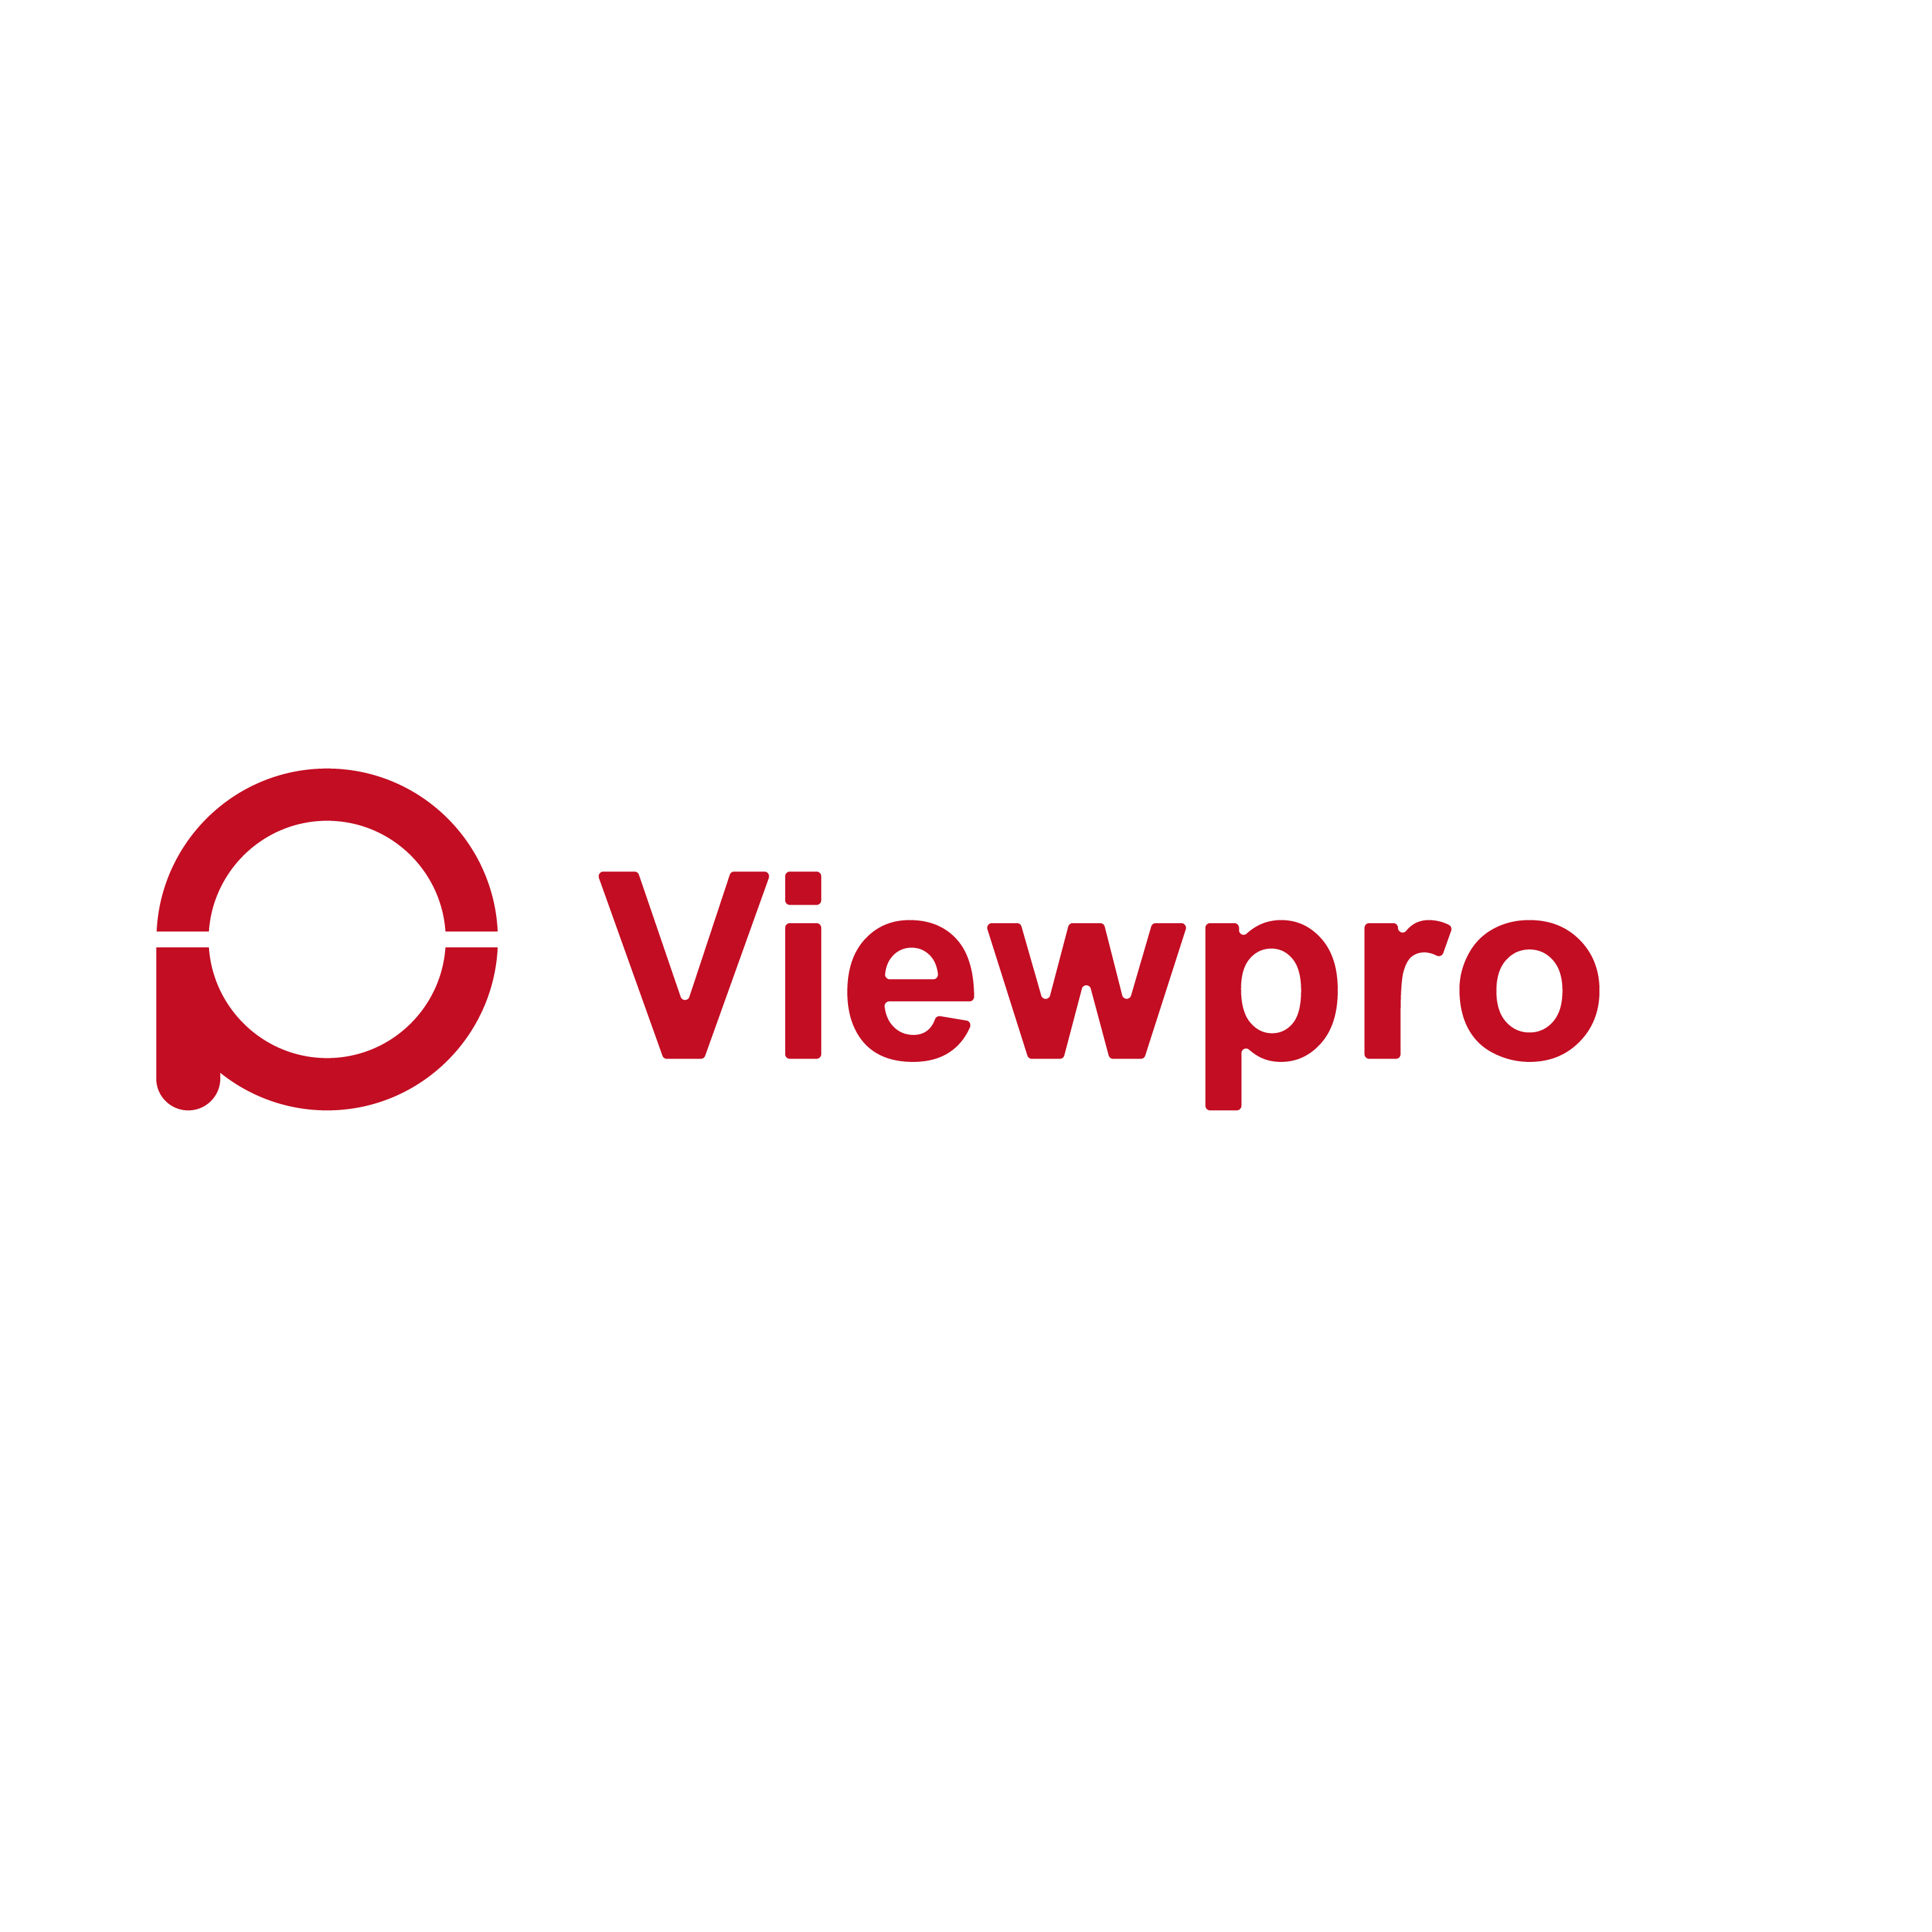 Viewpro Company Rename Notification